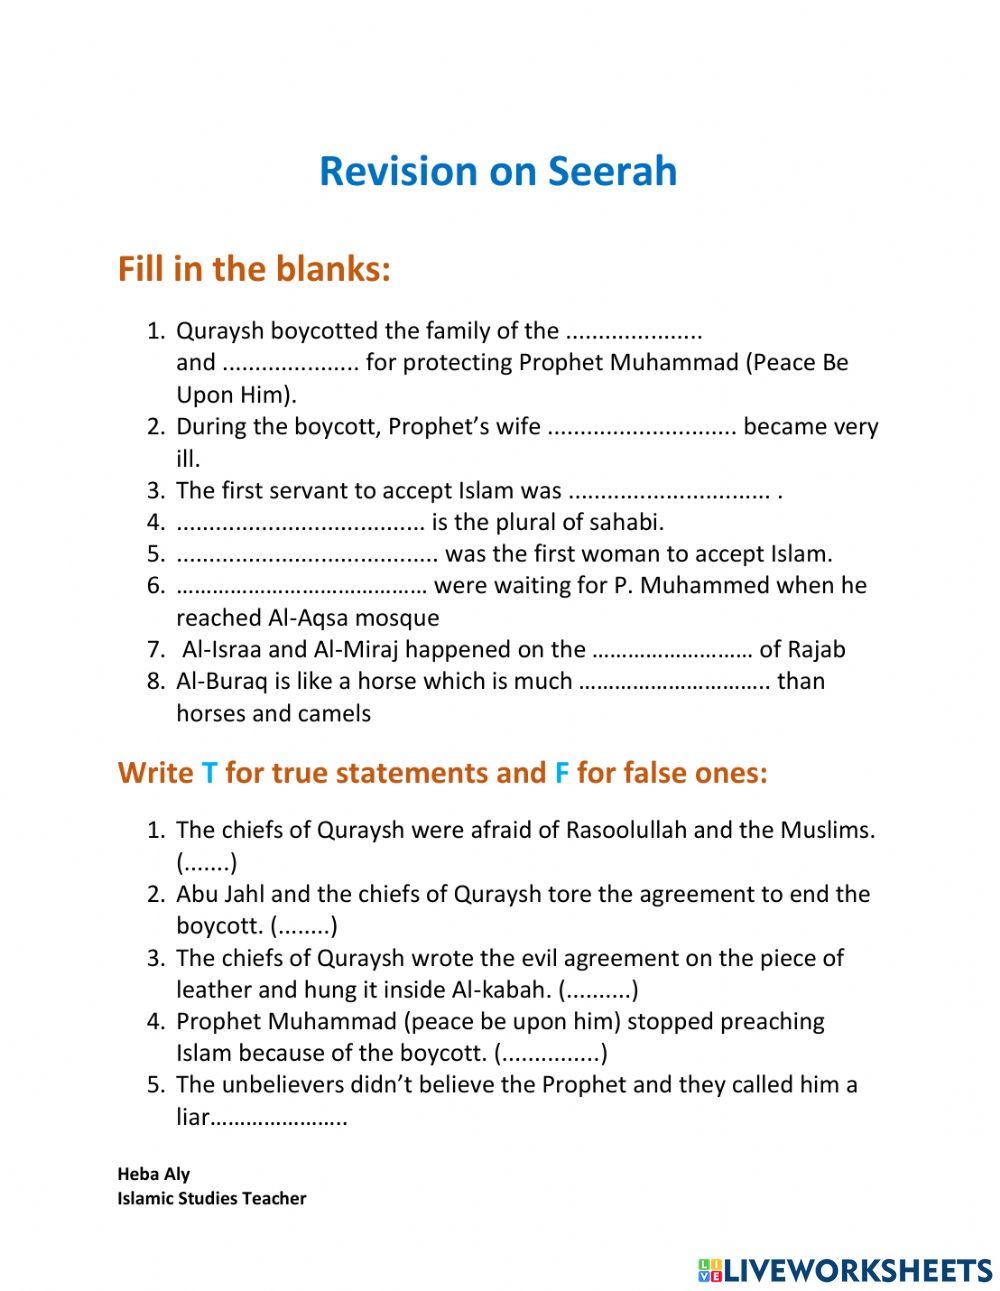 Seerah Revision Level 3 Islamic Studies